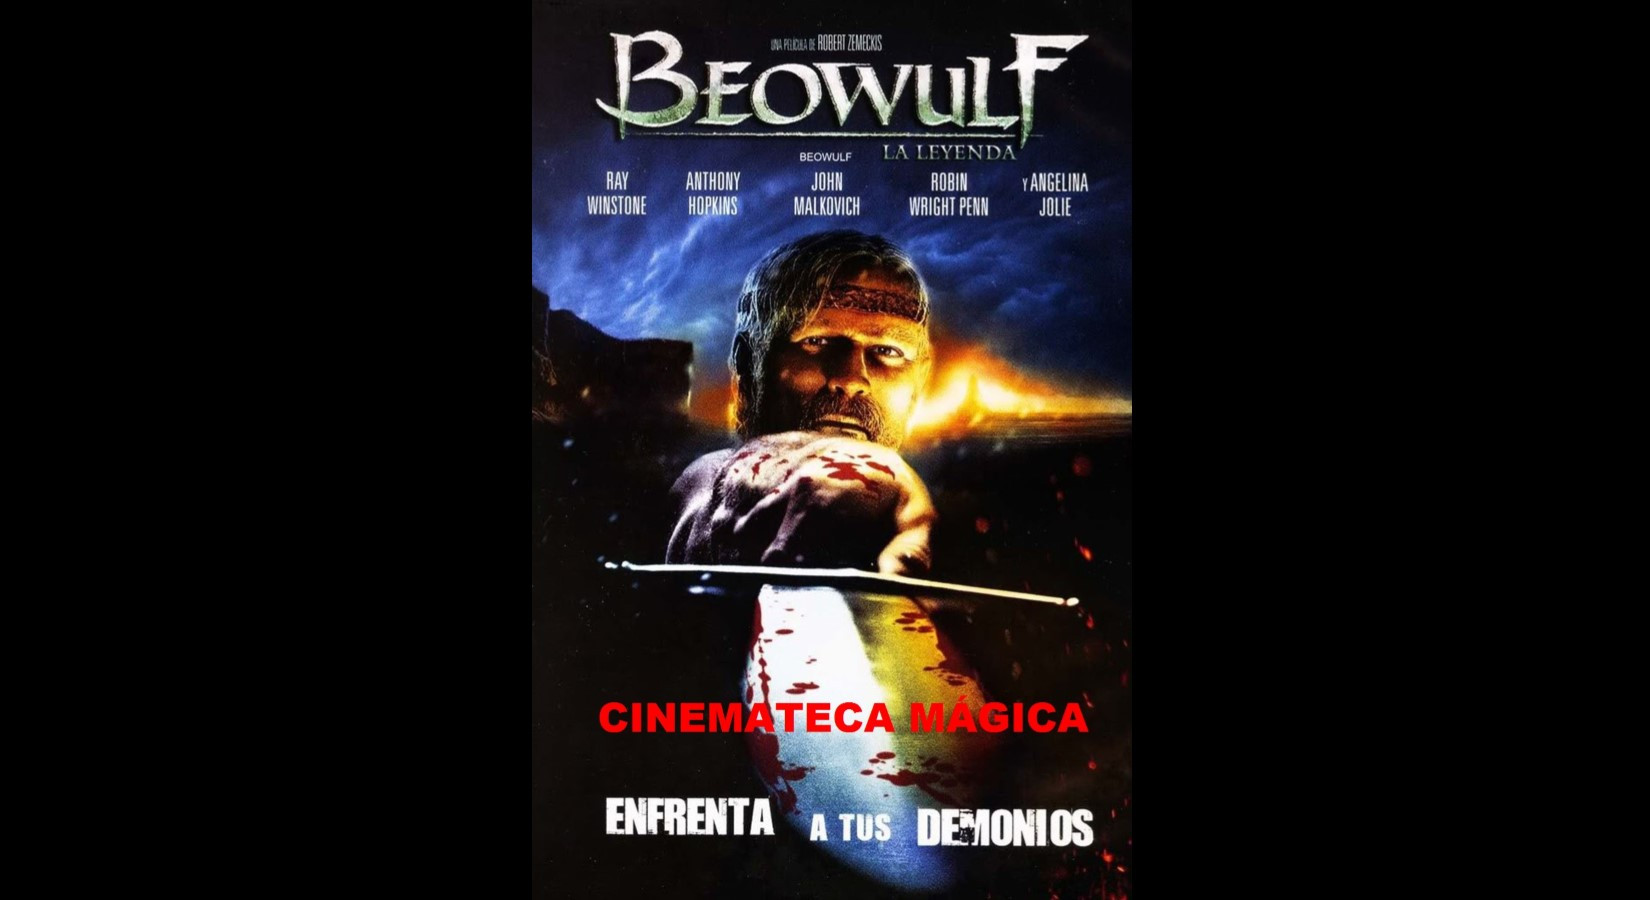 BEOWULF / CINEMATECA MÁGICA